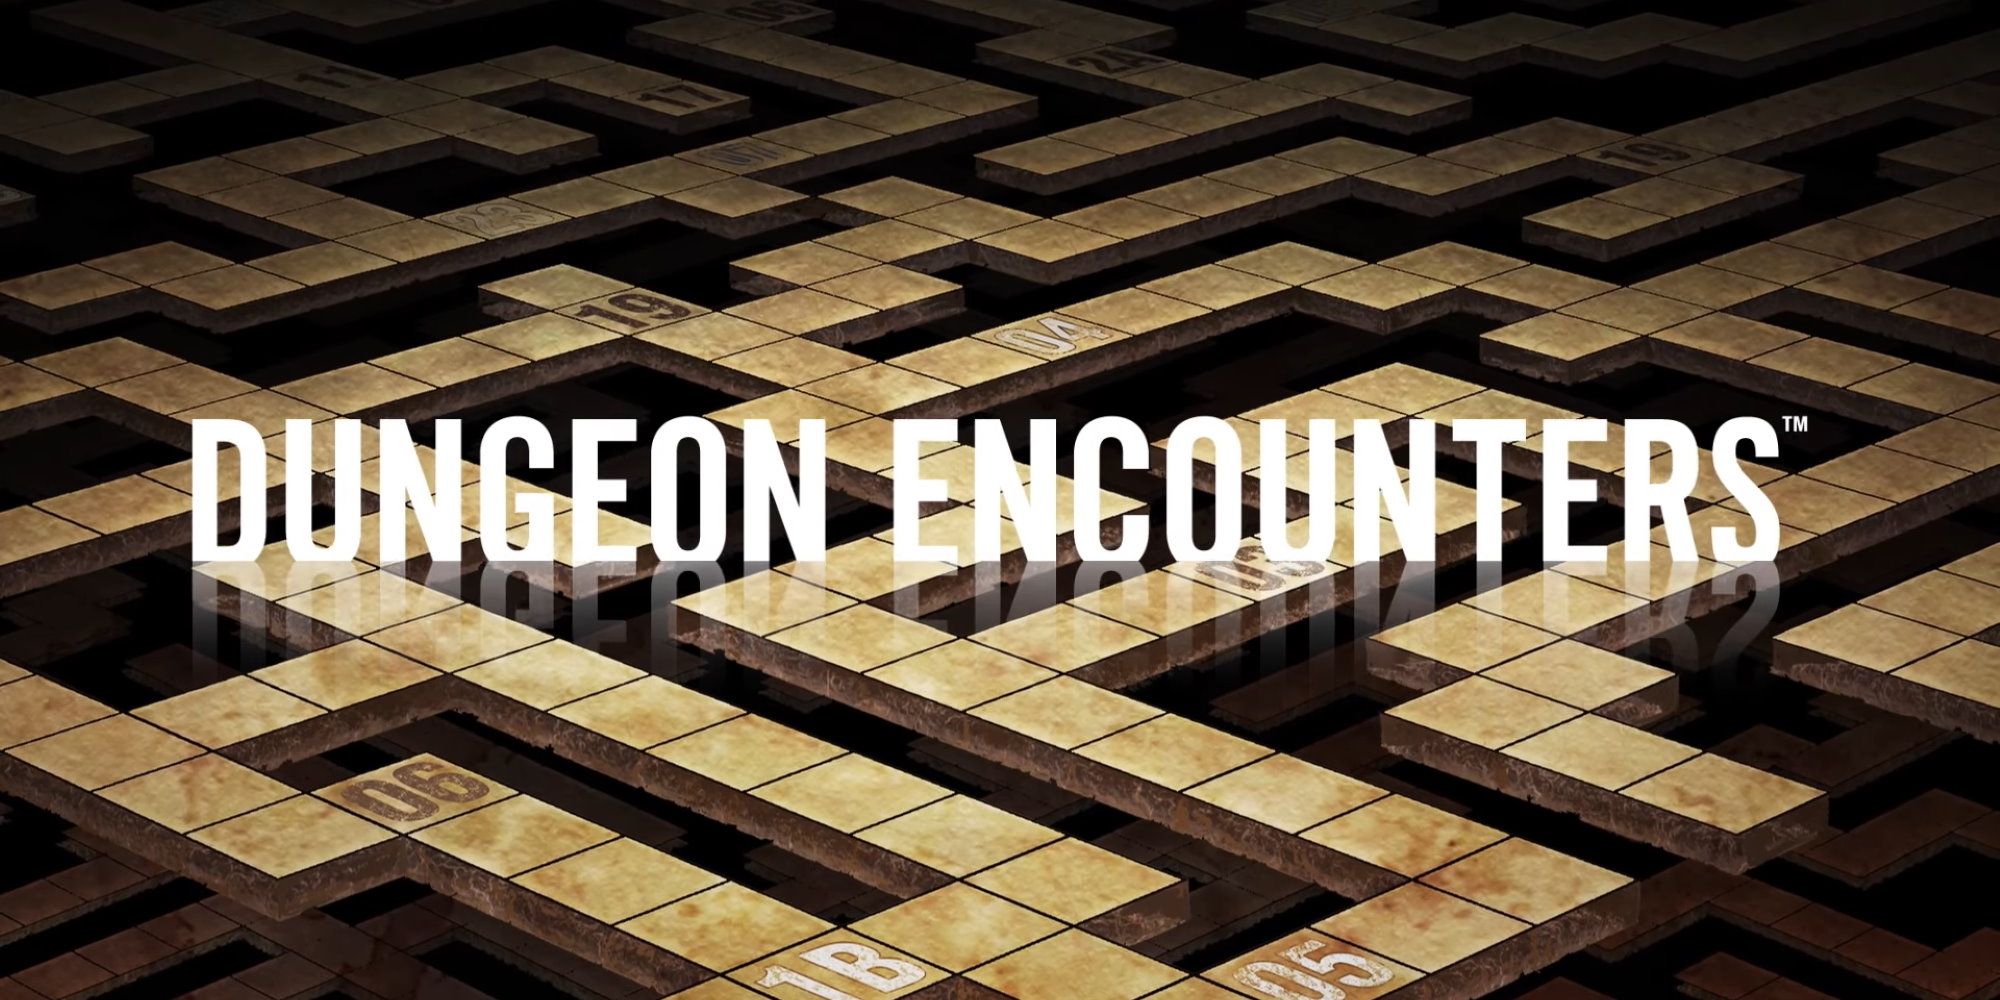 Dungeon Encounters - via Saquare Enix